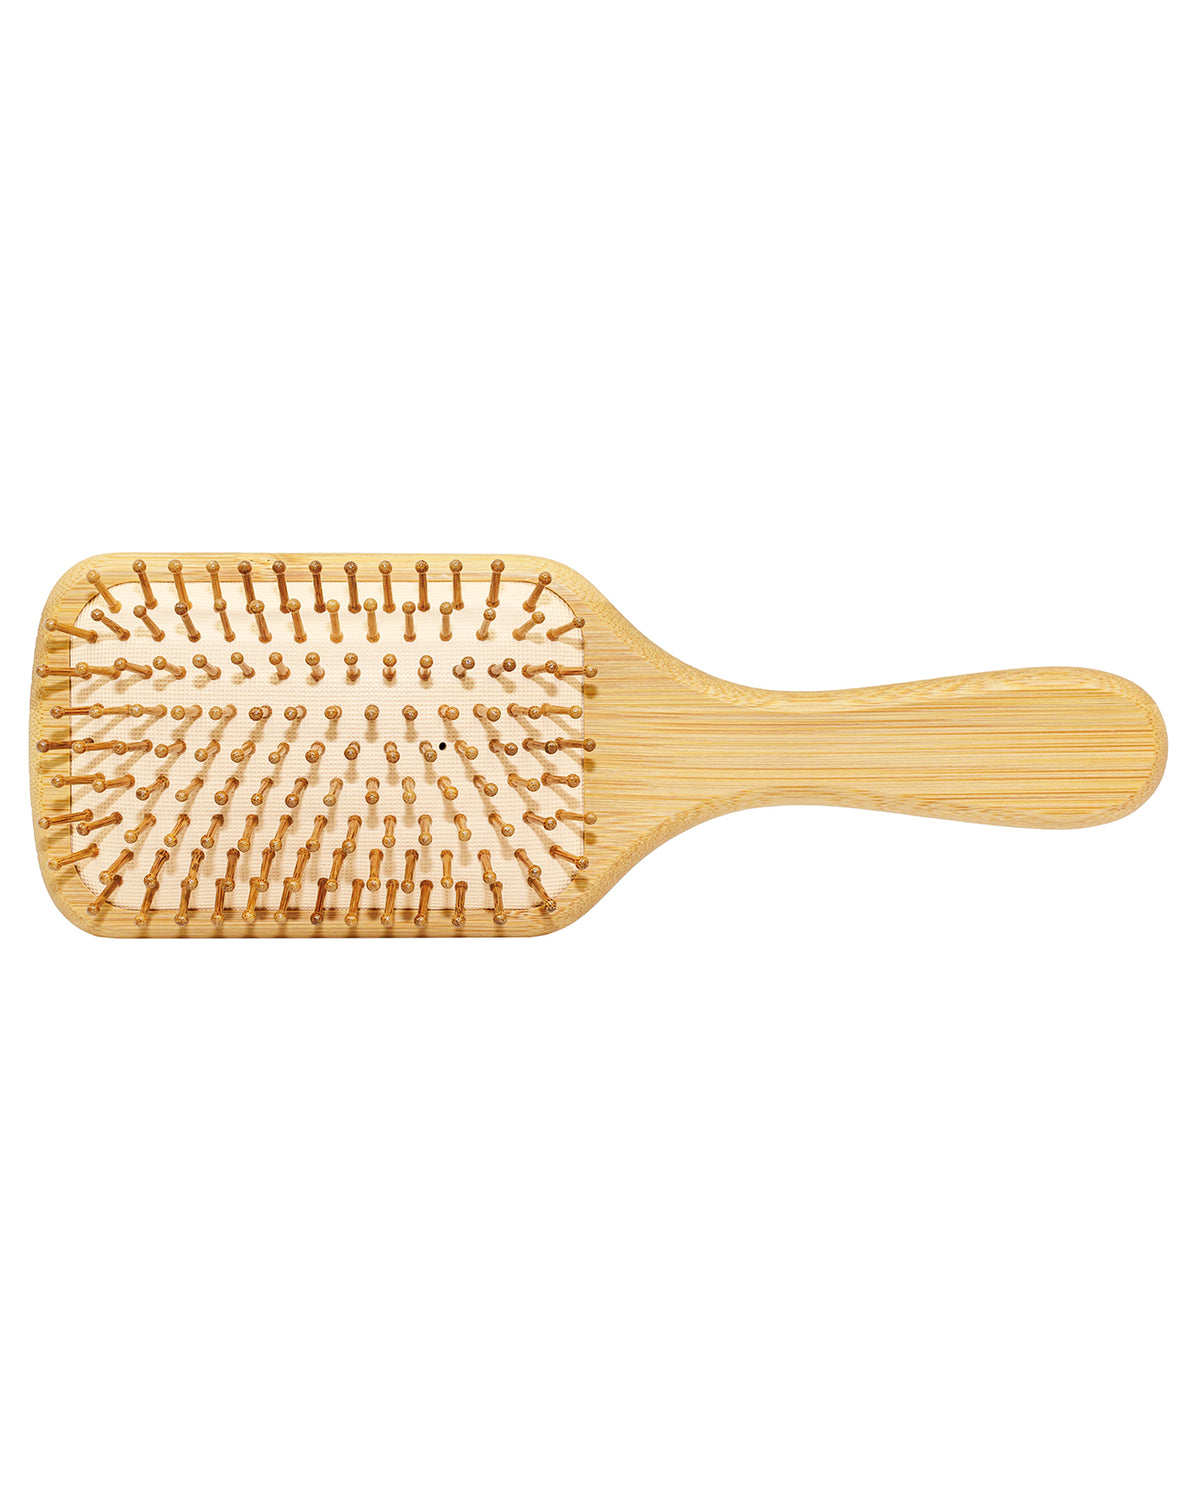 Bamboo Paddle Brush - Virgo